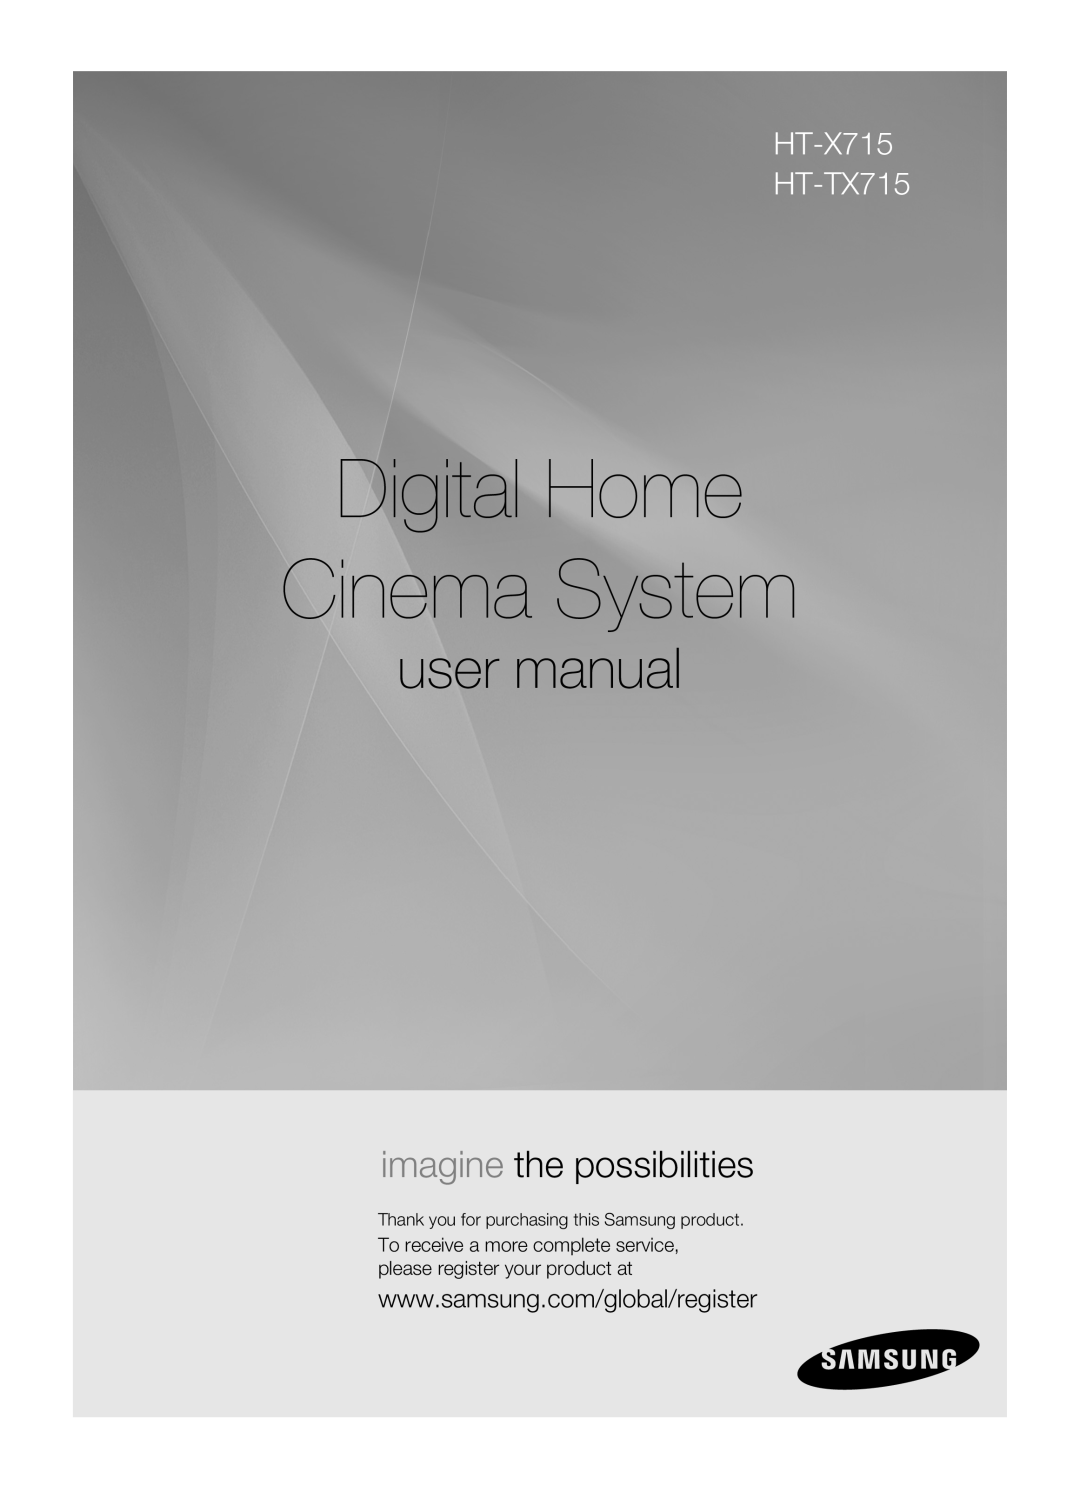 Samsung user manual Digital Home Cinema System, imagine the possibilities, HT-X715 HT-TX715 